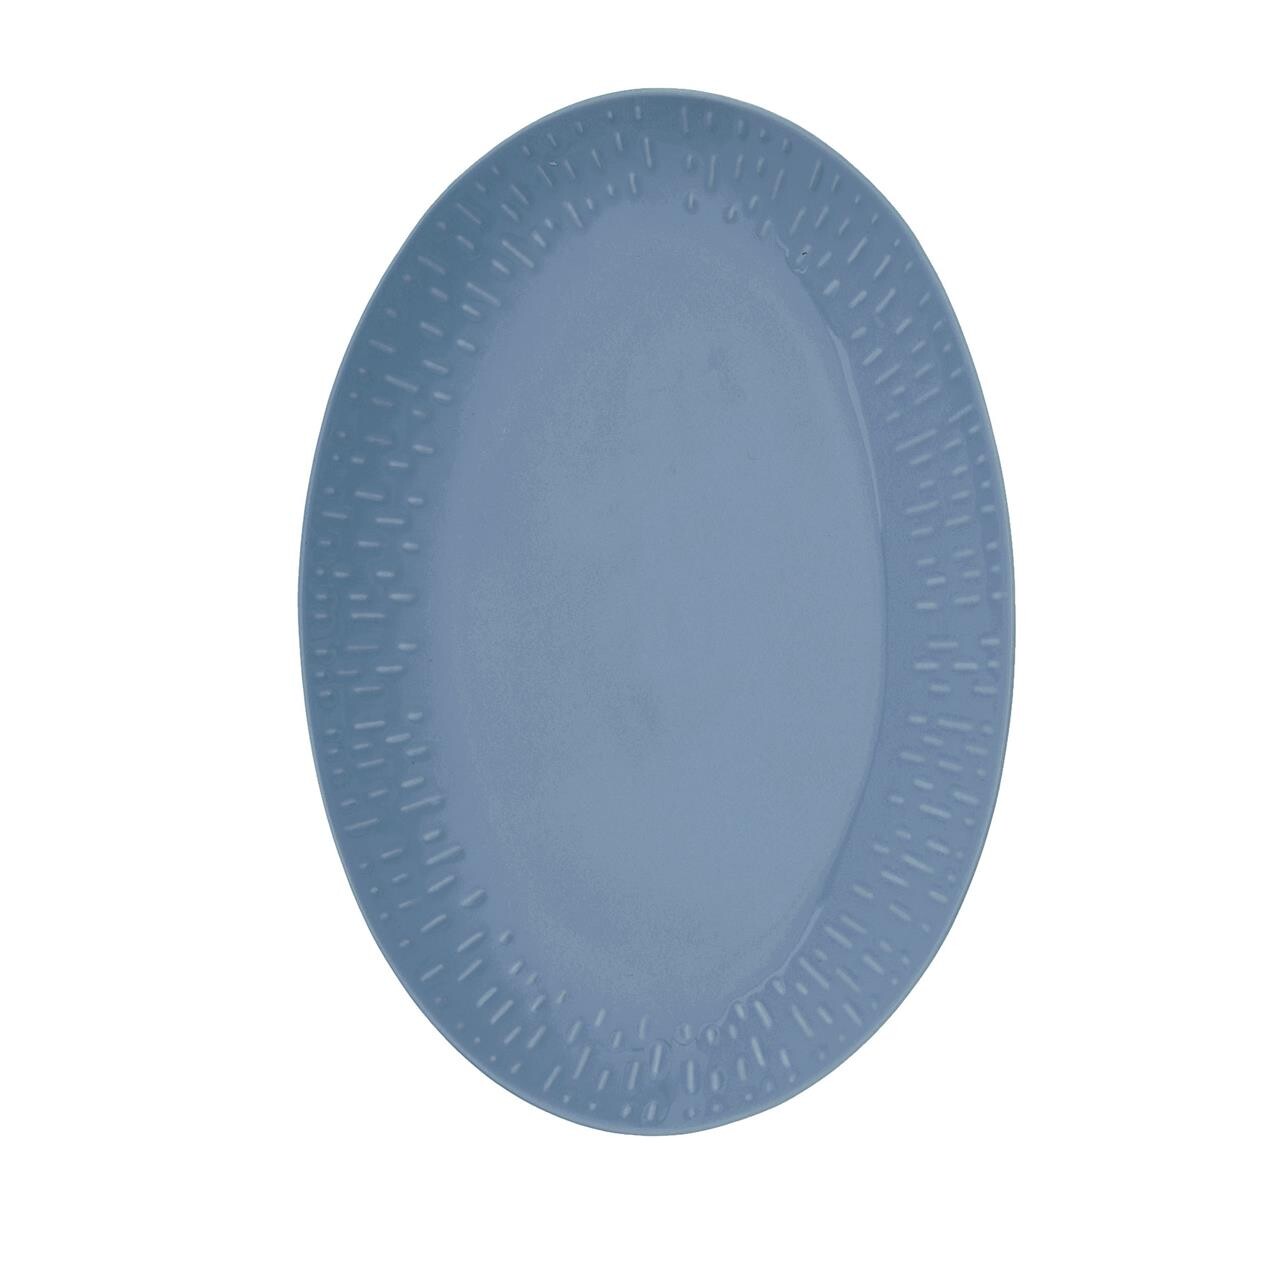 AIDA Confetti fad oval blueberry